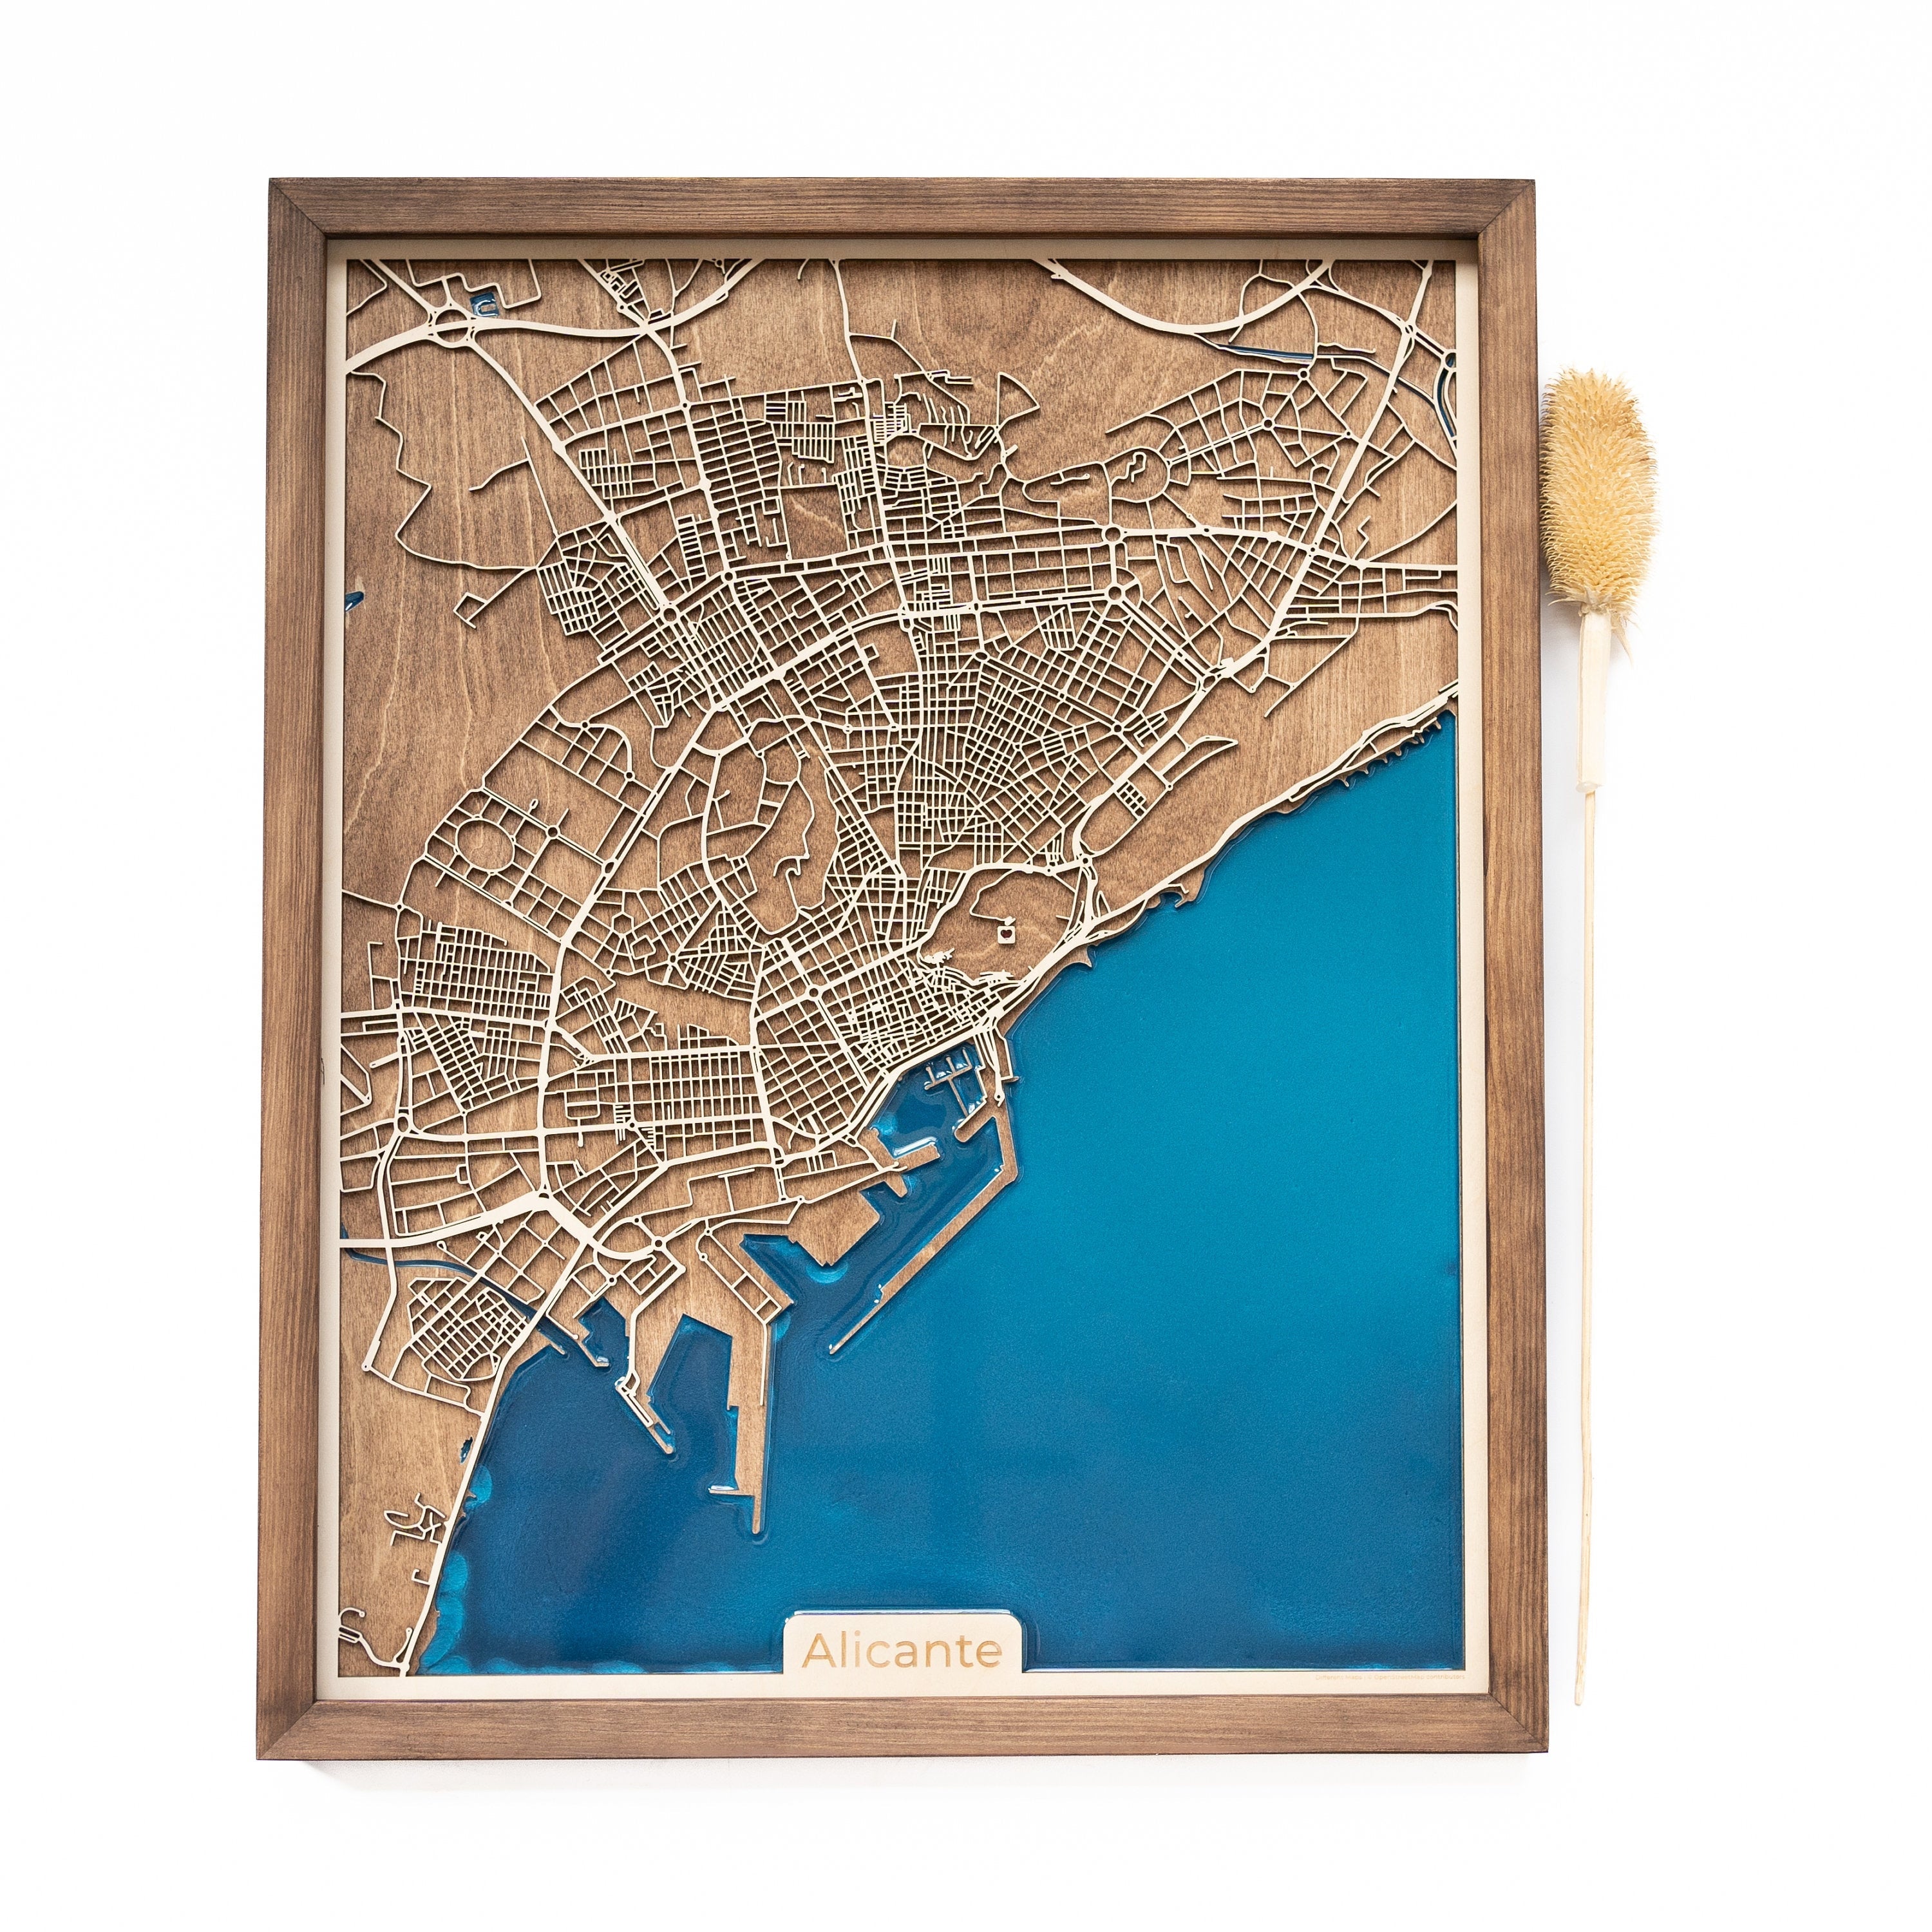 Alicante wood map